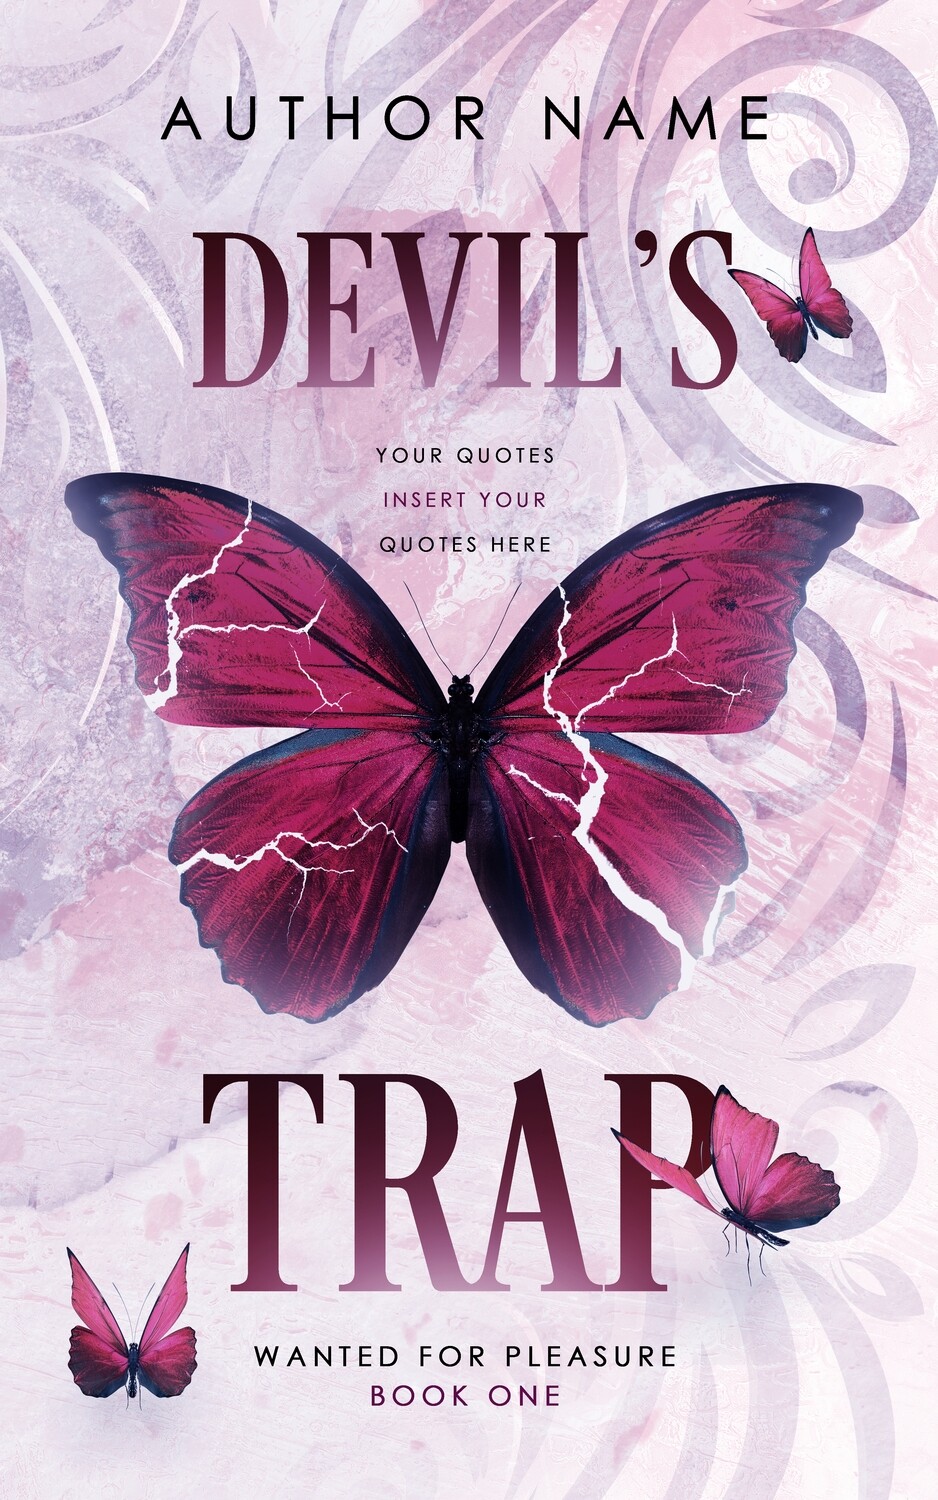 Ebook + Paperback: Devil's Trap DUOLOGY